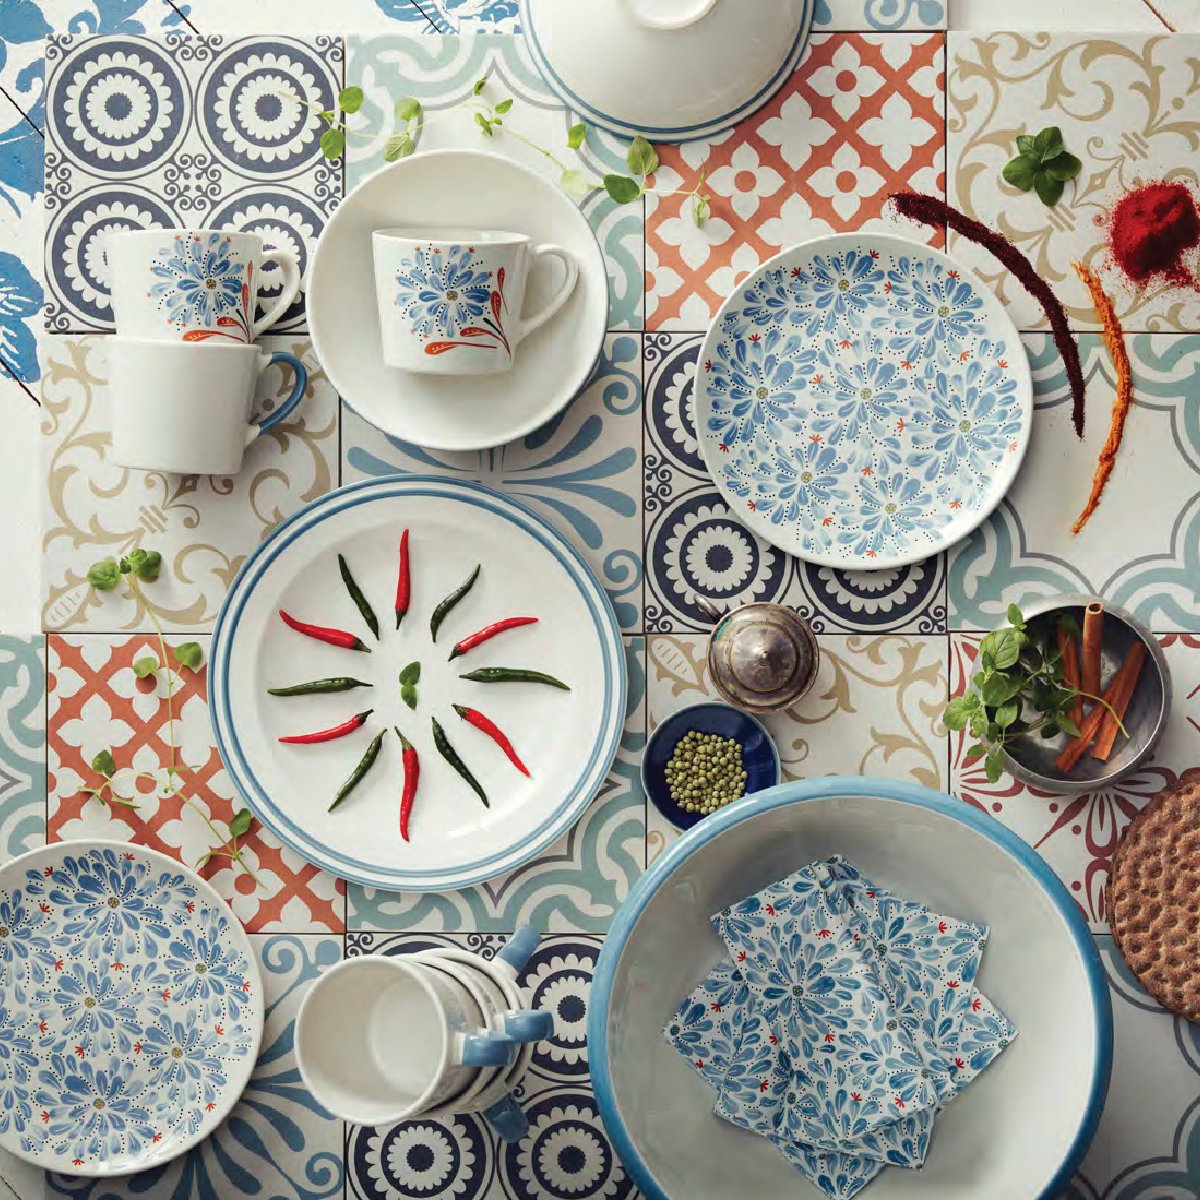 kook een maaltijd Arabisch Het IKEA Qatar on Twitter: "The new FINSTILT dinnerware collection finds itself  inspired by Swedish heritage motifs in a unique mix of patterns.  https://t.co/sigUBEuidn https://t.co/qHIqC3q5F0" / Twitter